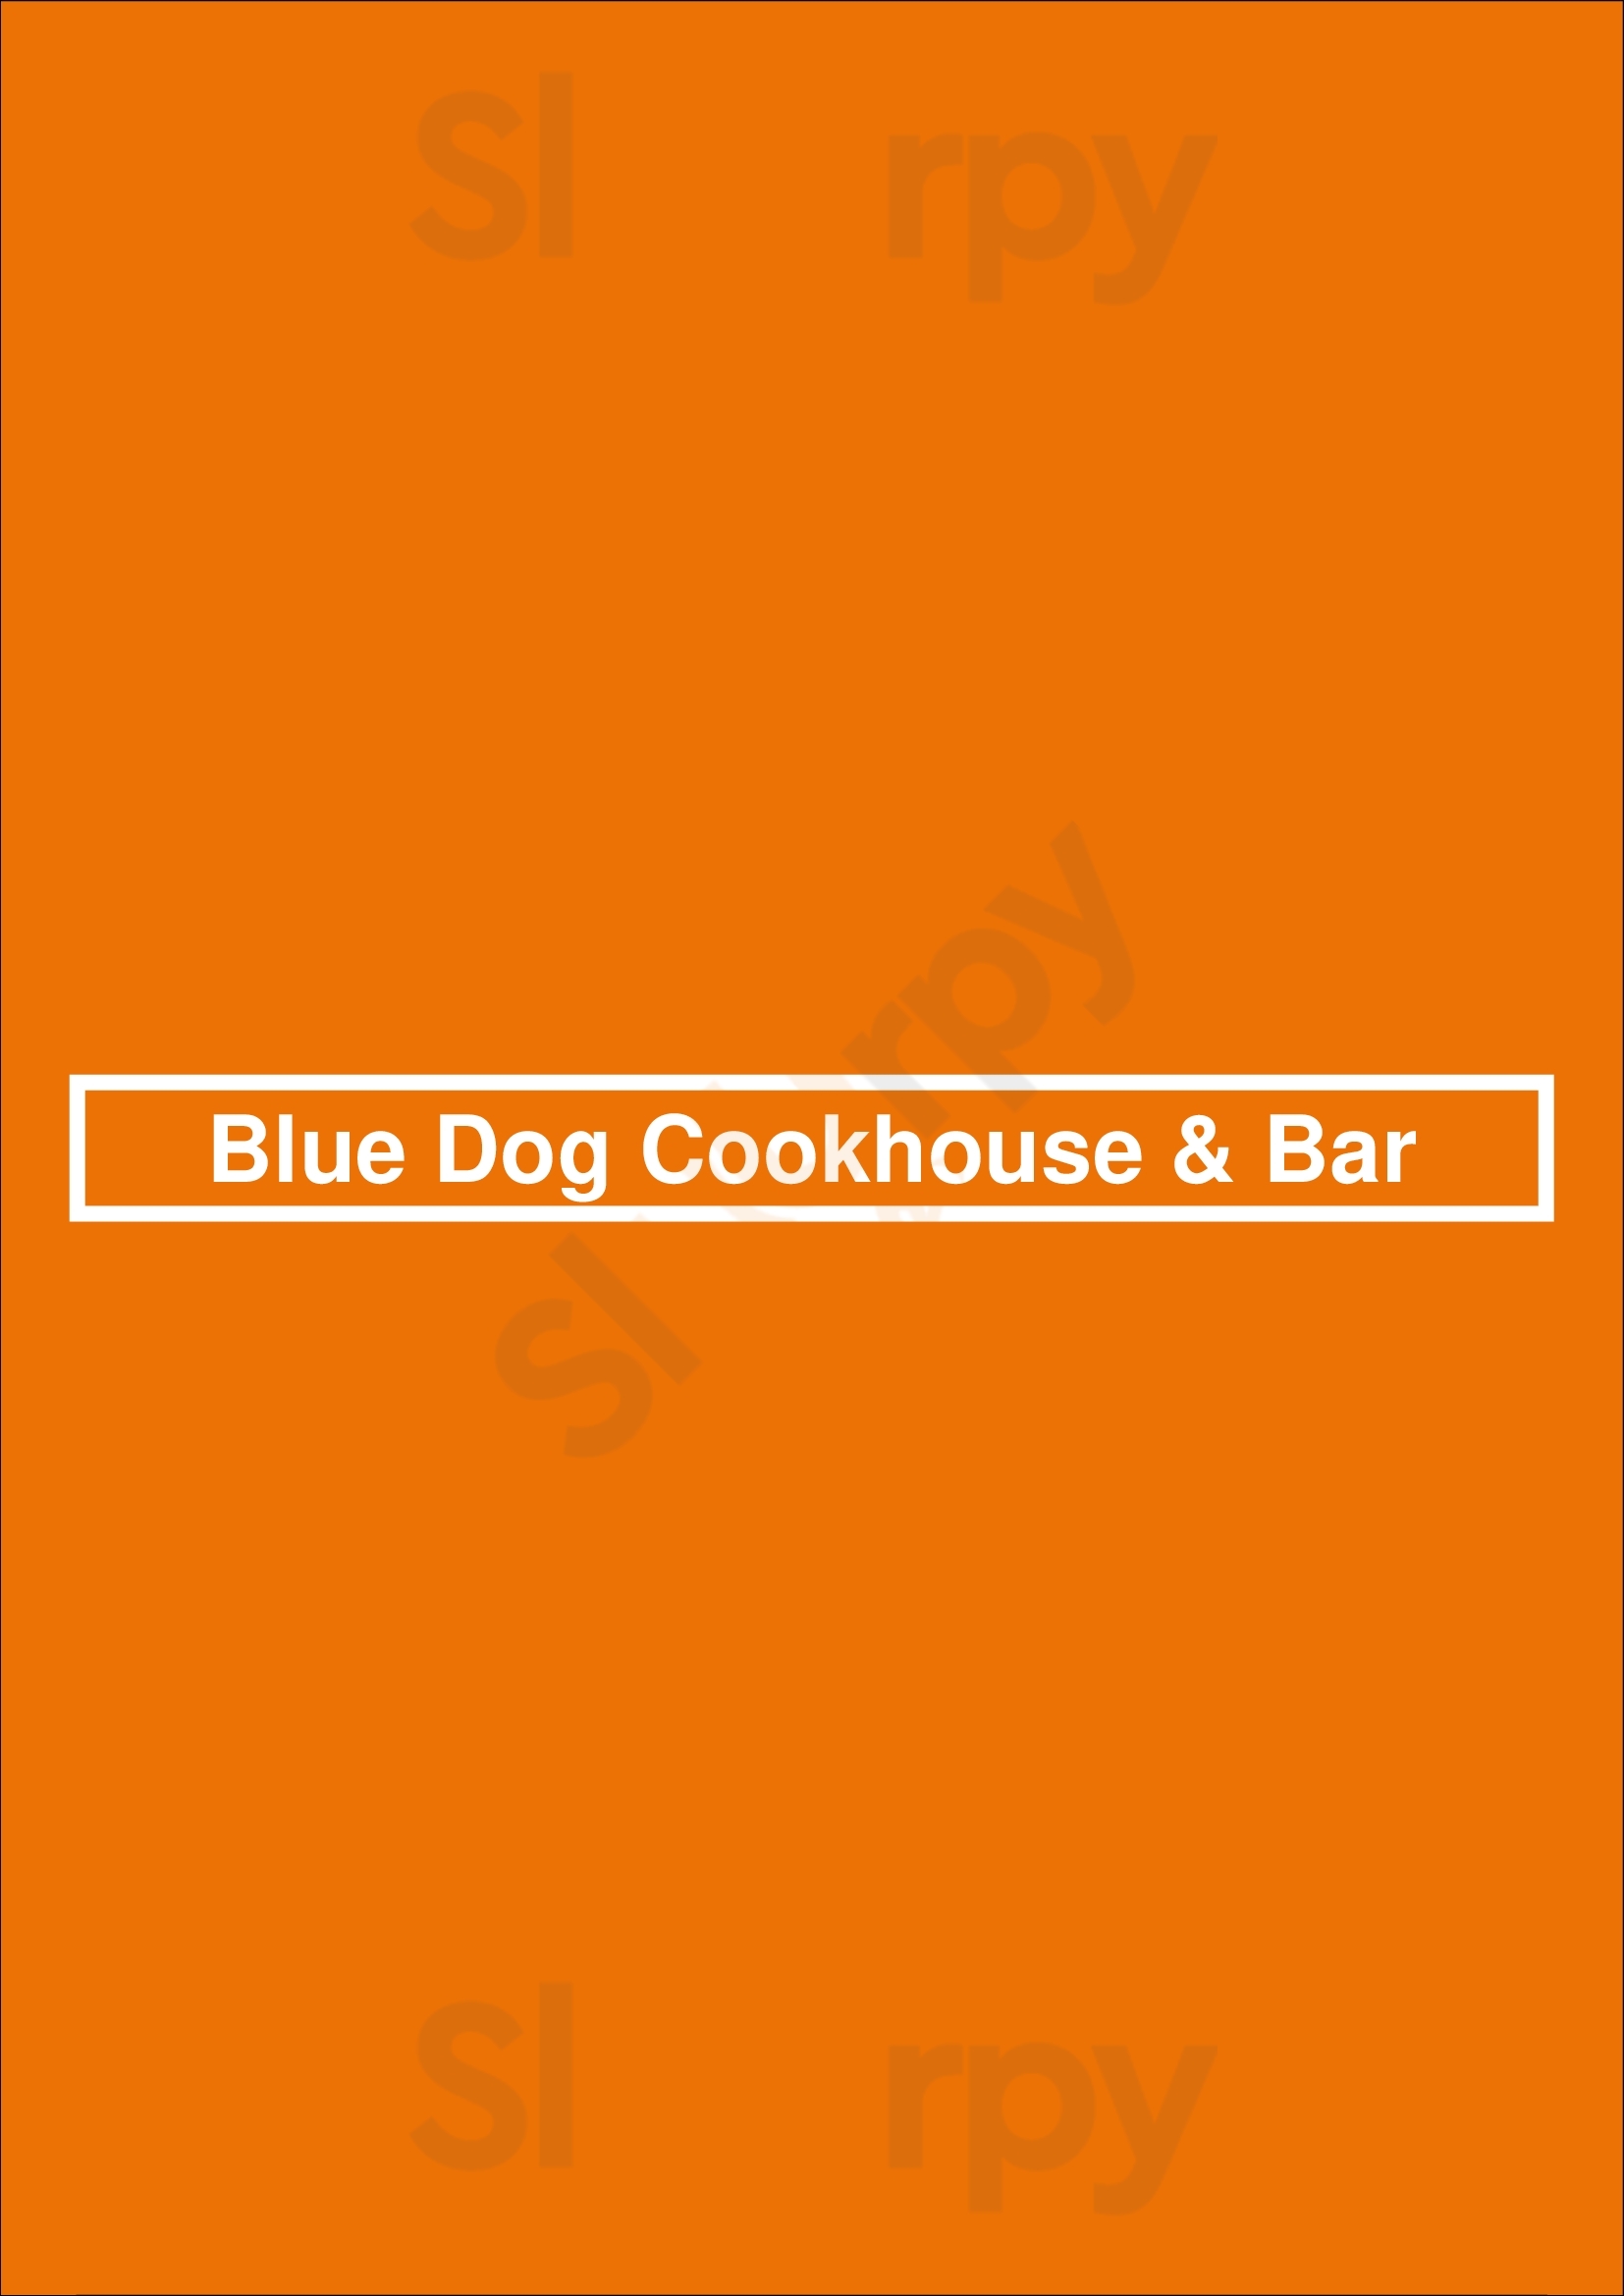 Blue Dog Cookhouse & Bar New York City Menu - 1